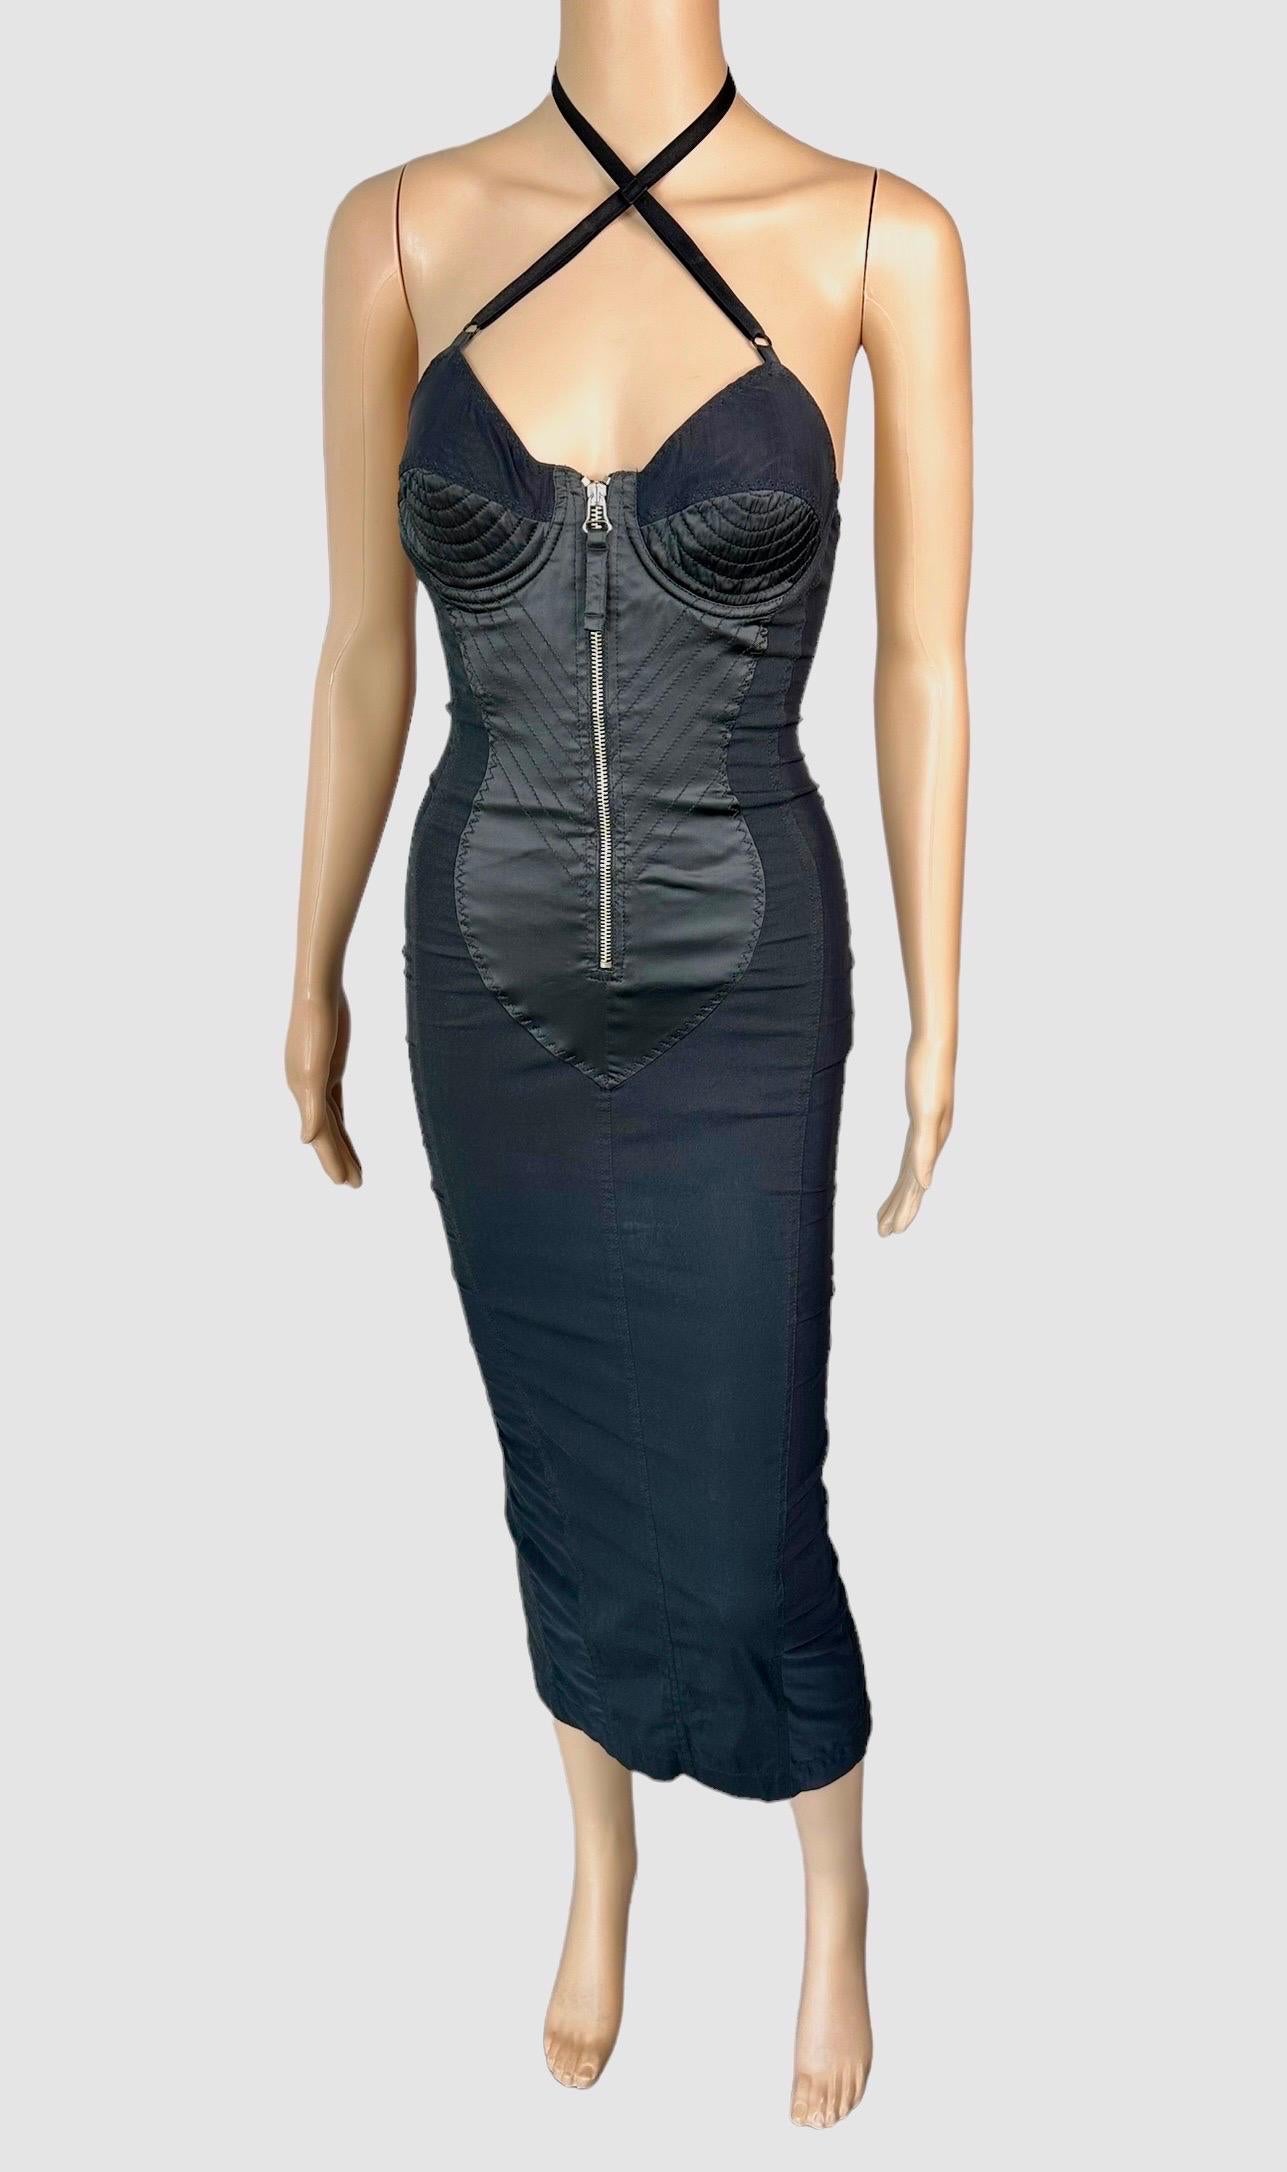 Jean Paul Gaultier 1990's Vintage Cone Bra Corset Bondage Black Evening Dress For Sale 5